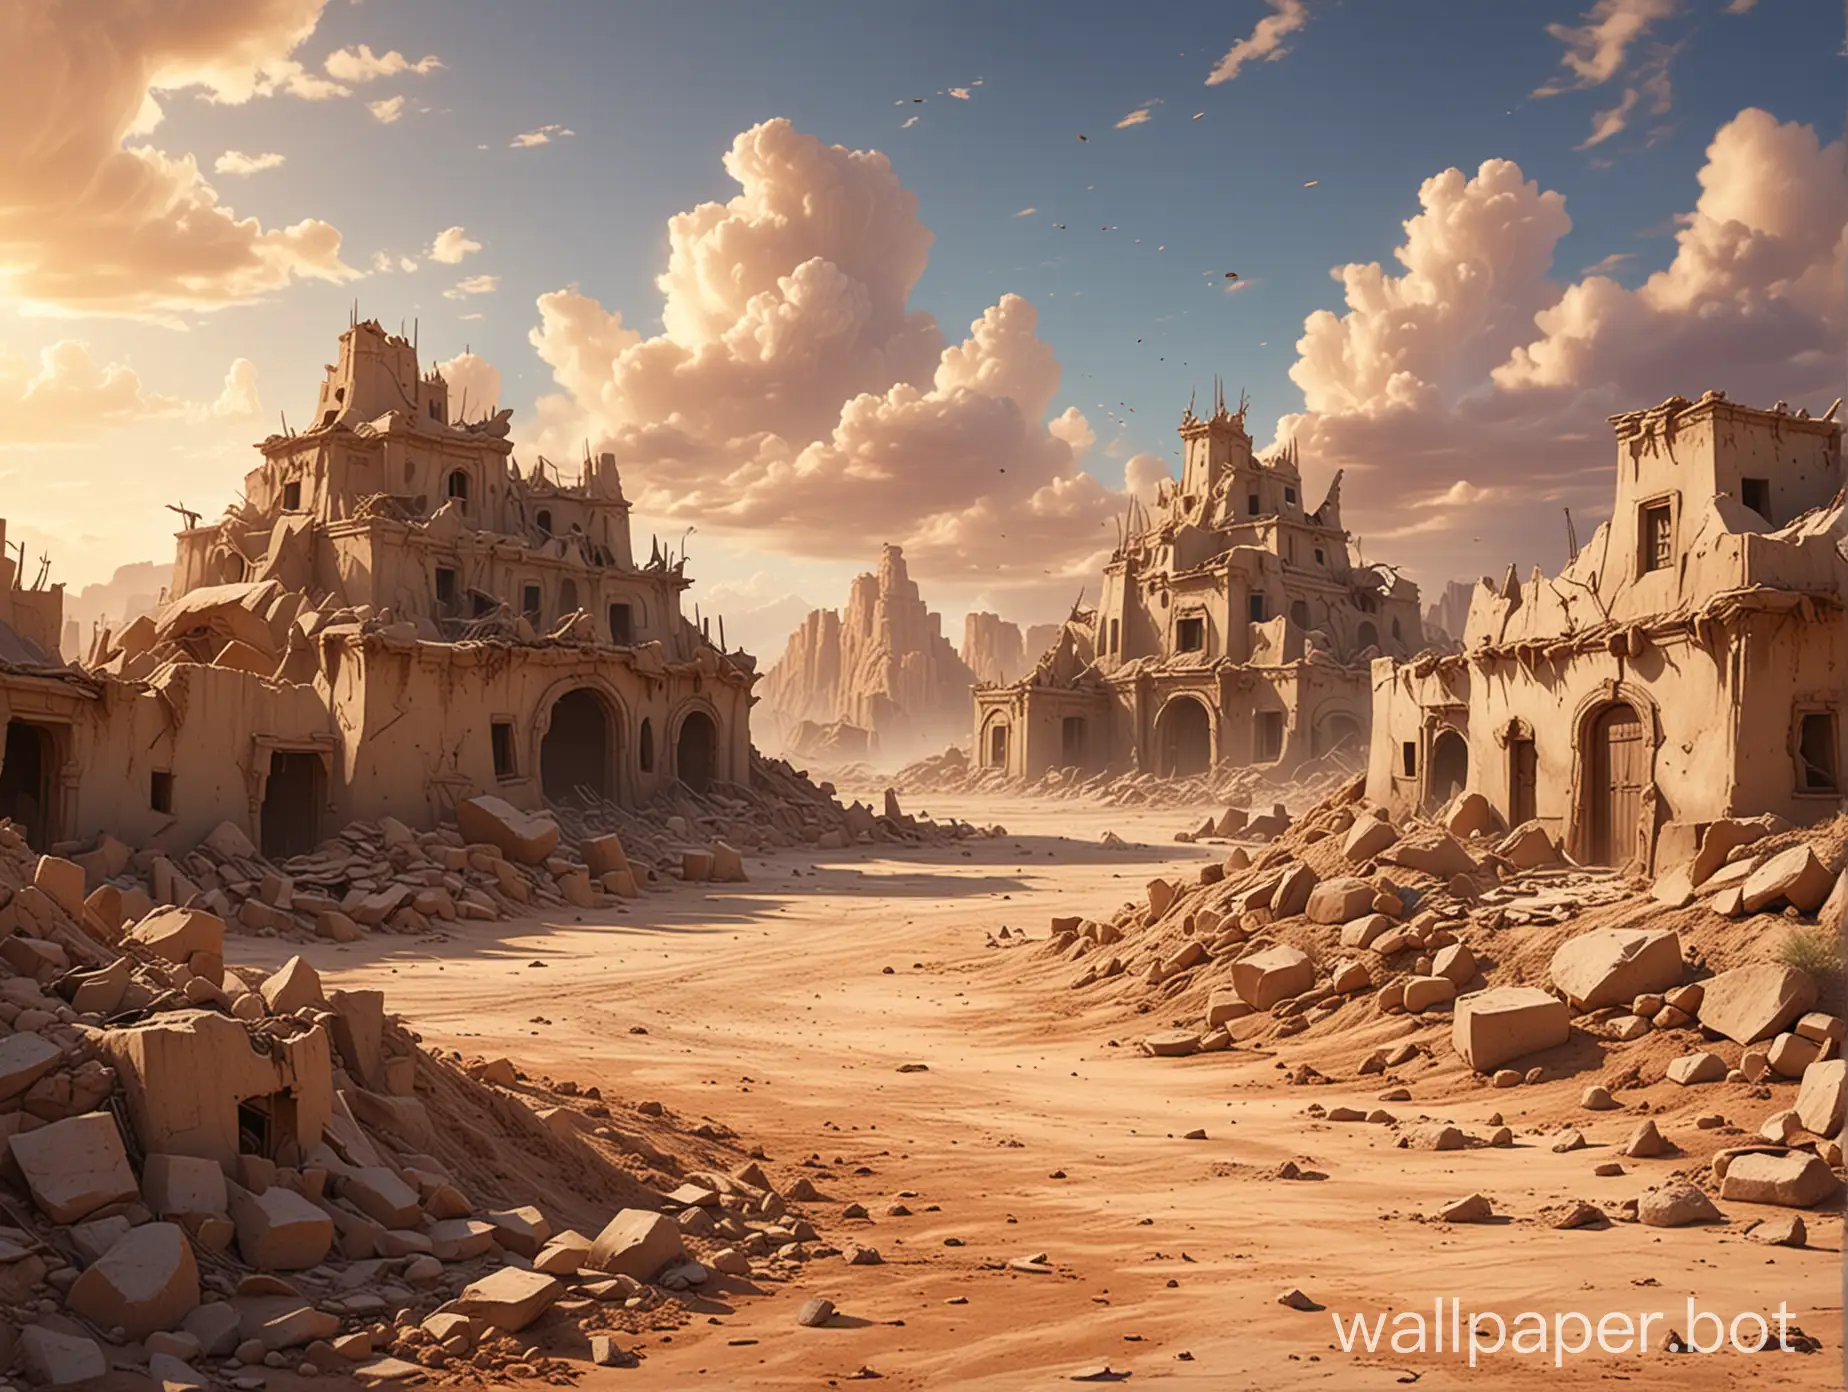 Ruins-of-a-Sand-Castle-Kingdom-in-a-Dreamy-Desert-Landscape